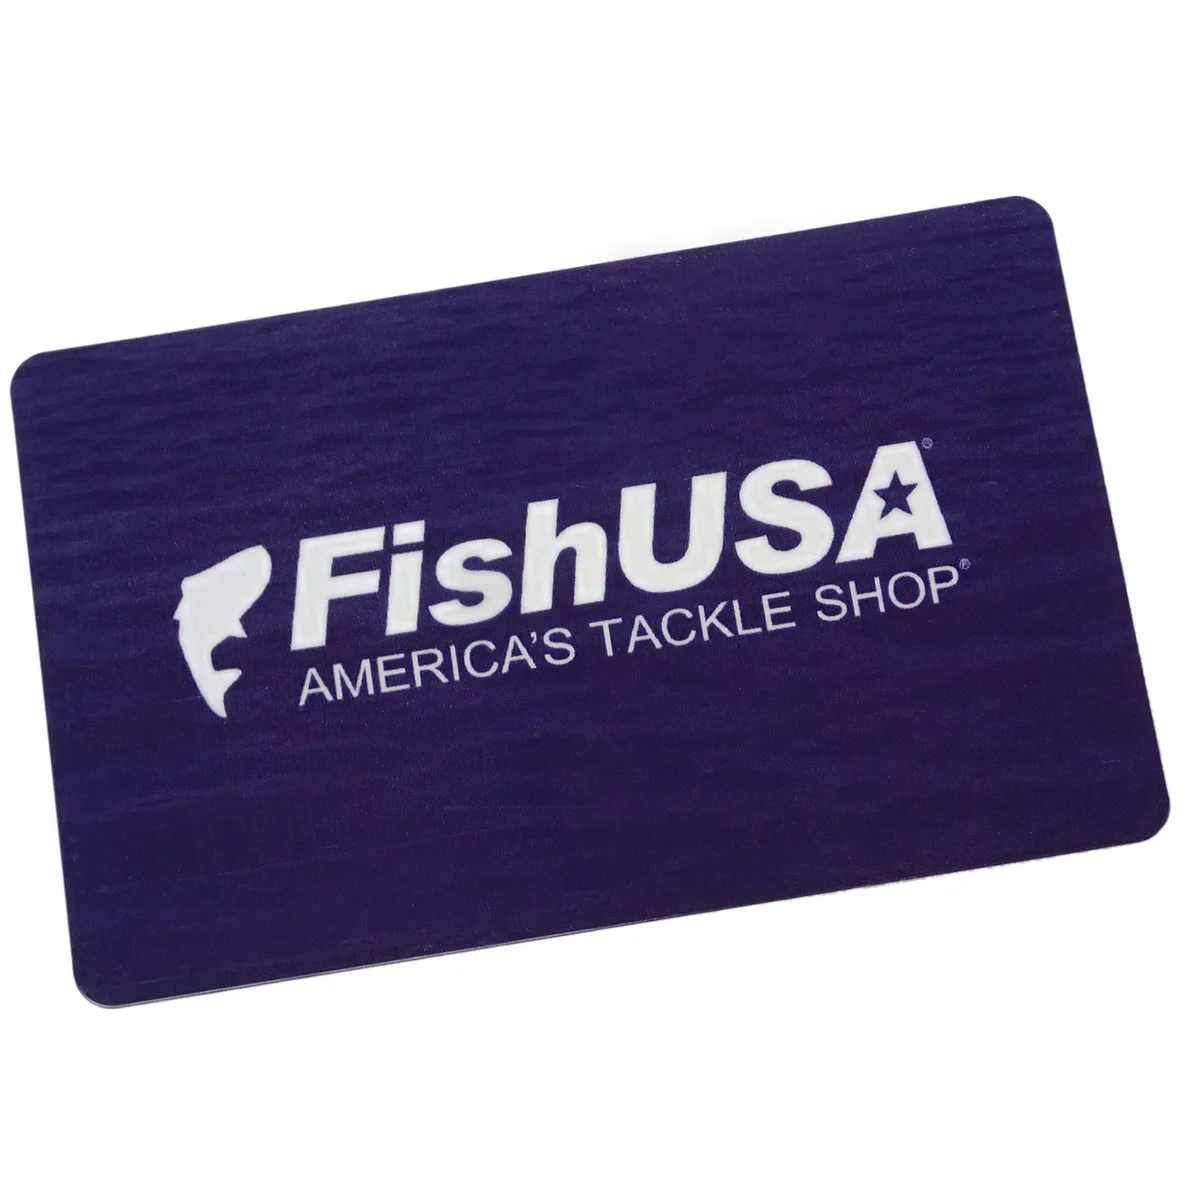 FishUSA Gift Card Giveaway Winners - Wired2Fish